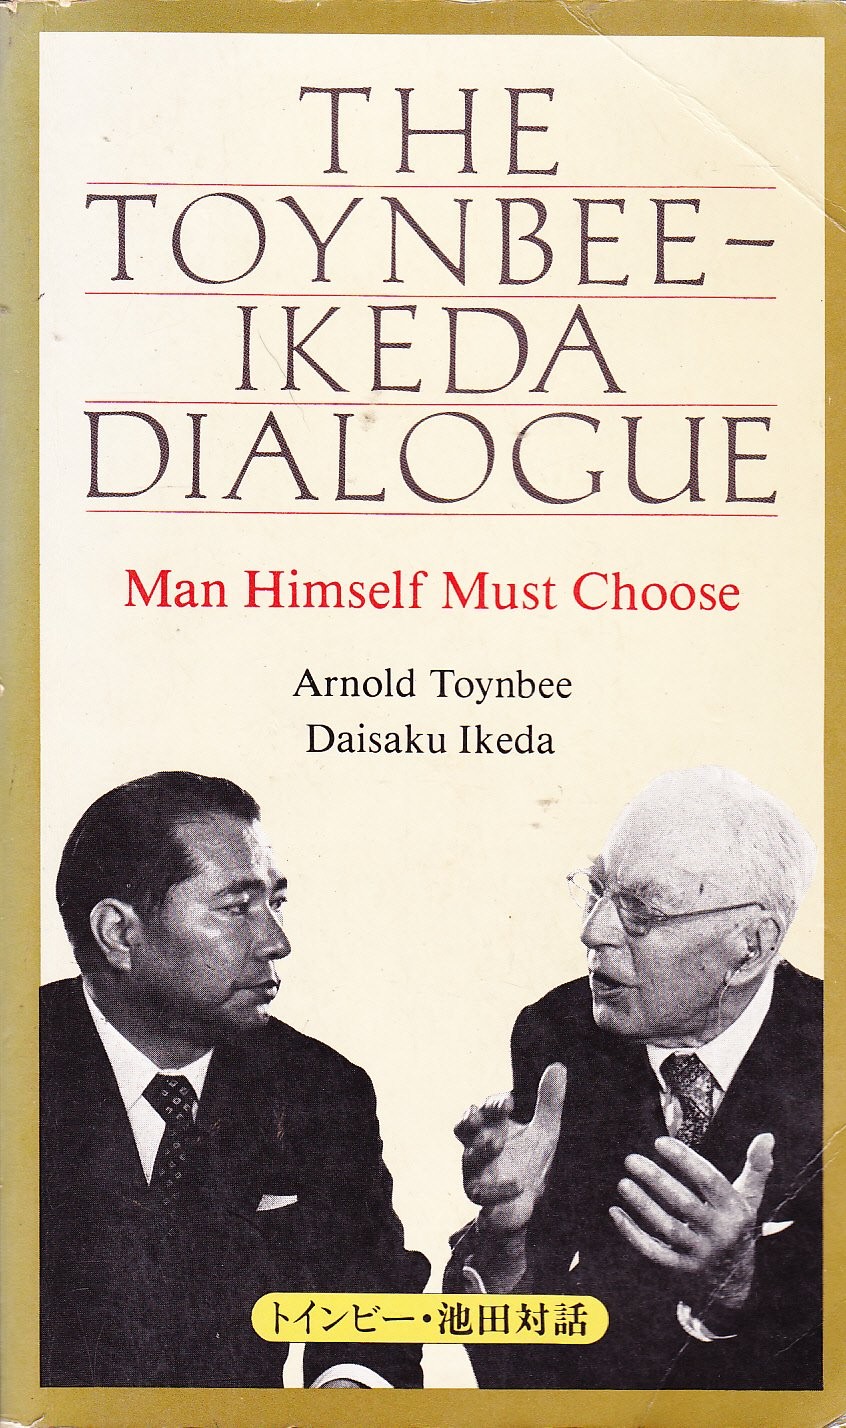 The Toynbee-Ikeda dialogue - Man Himself Must Choose